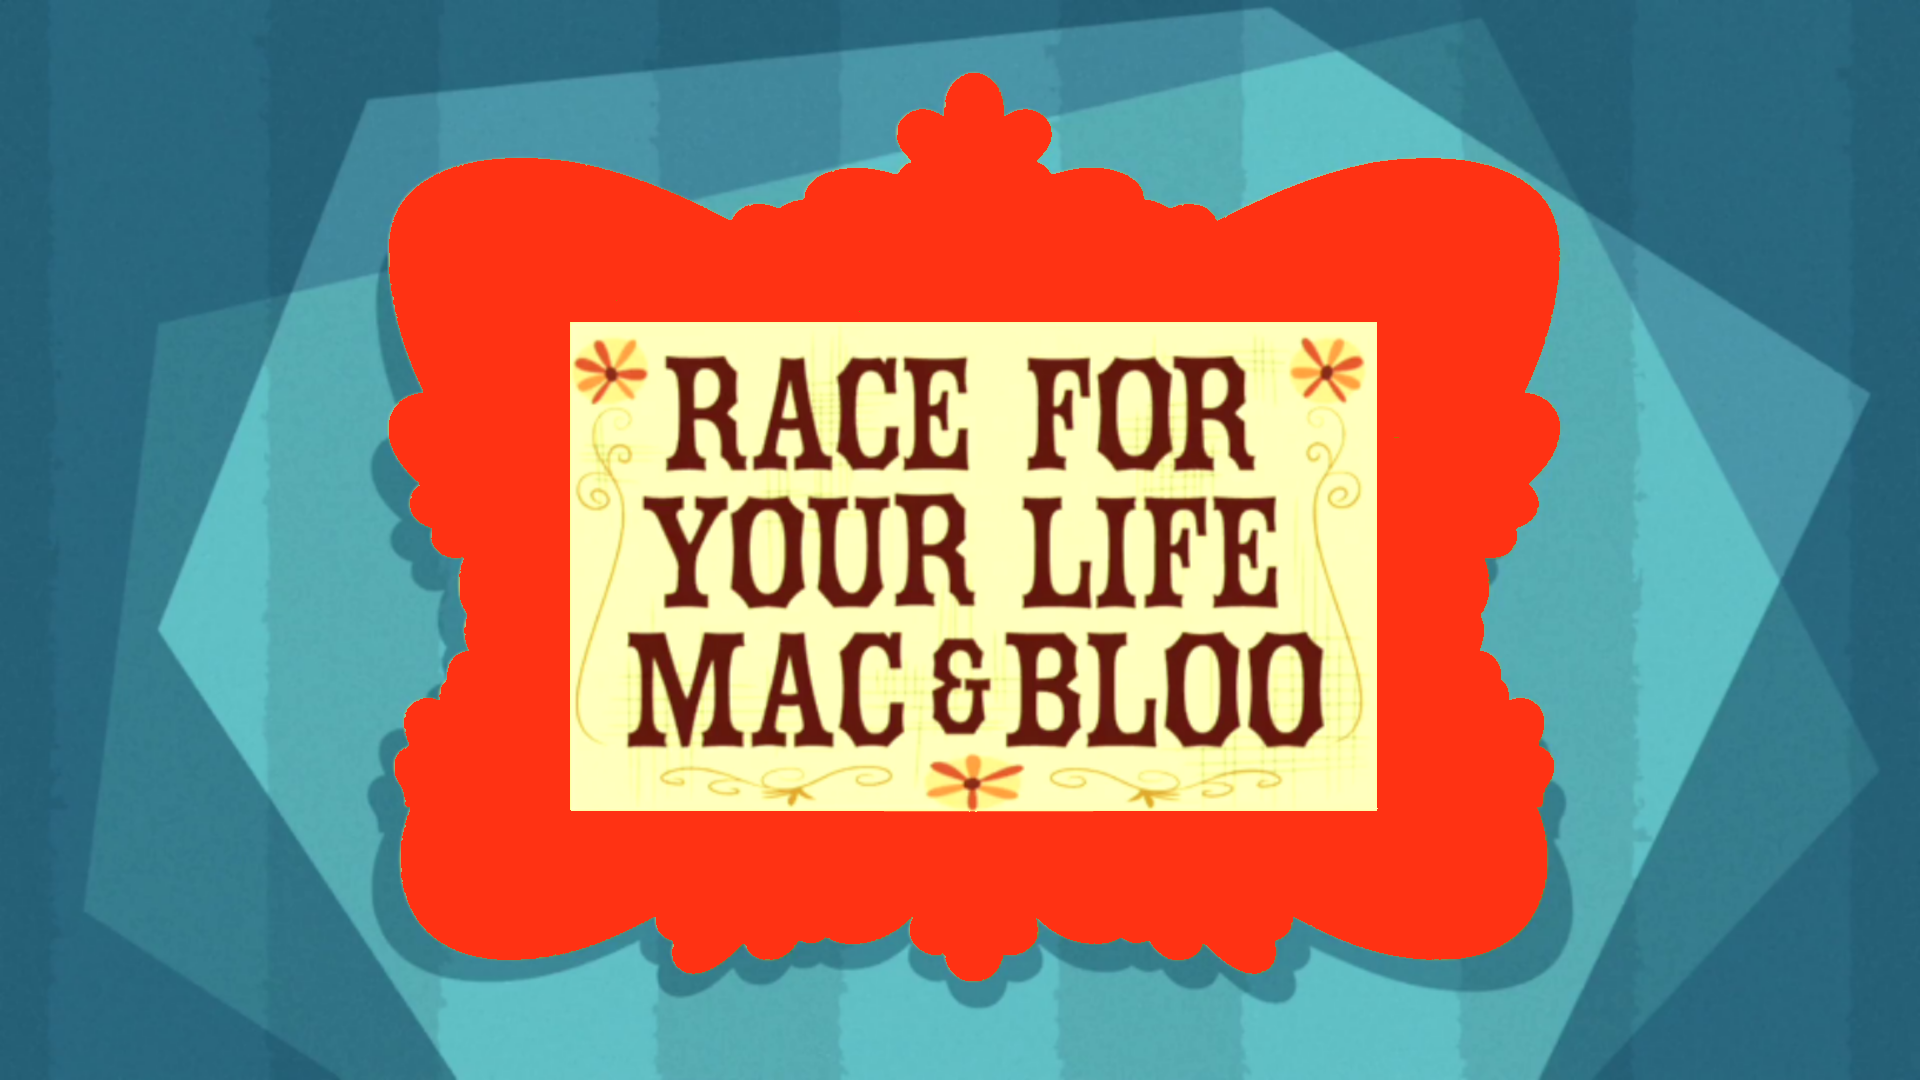 Race For Your Lïfe Mac & Bloo Imagïnatïon ComPanïons A Foster's